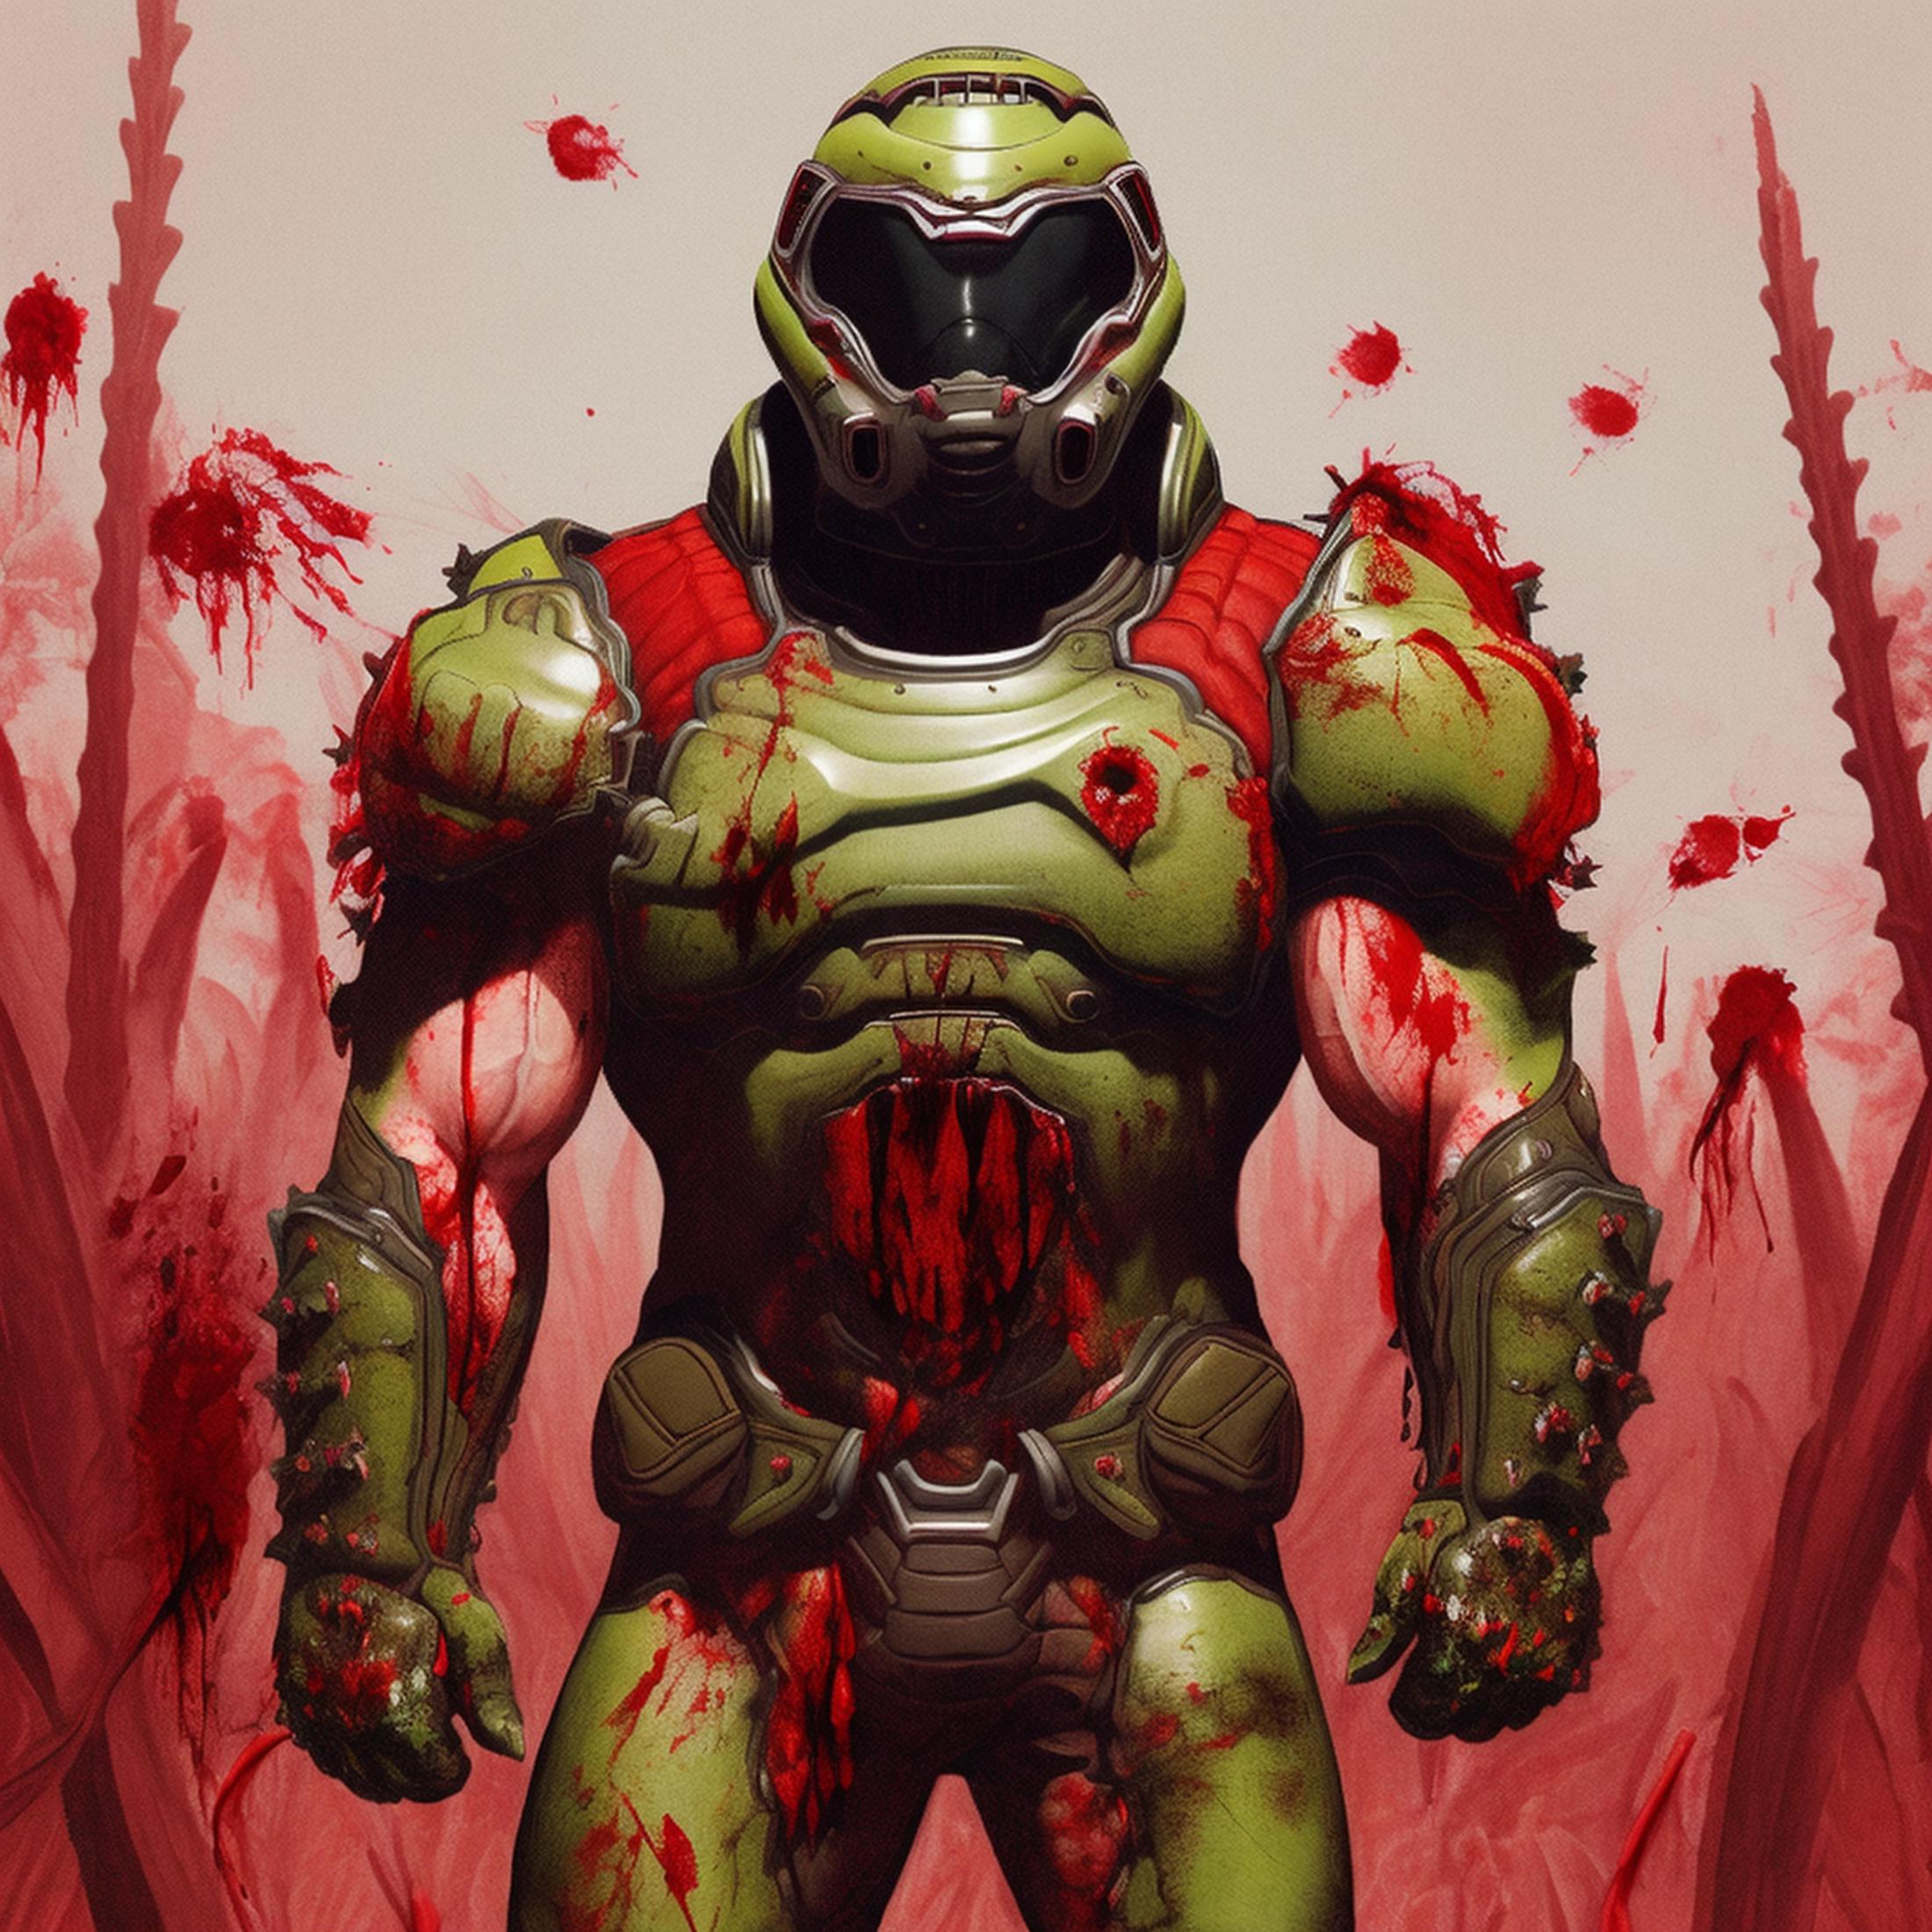 Doom Slayer image by pusherman